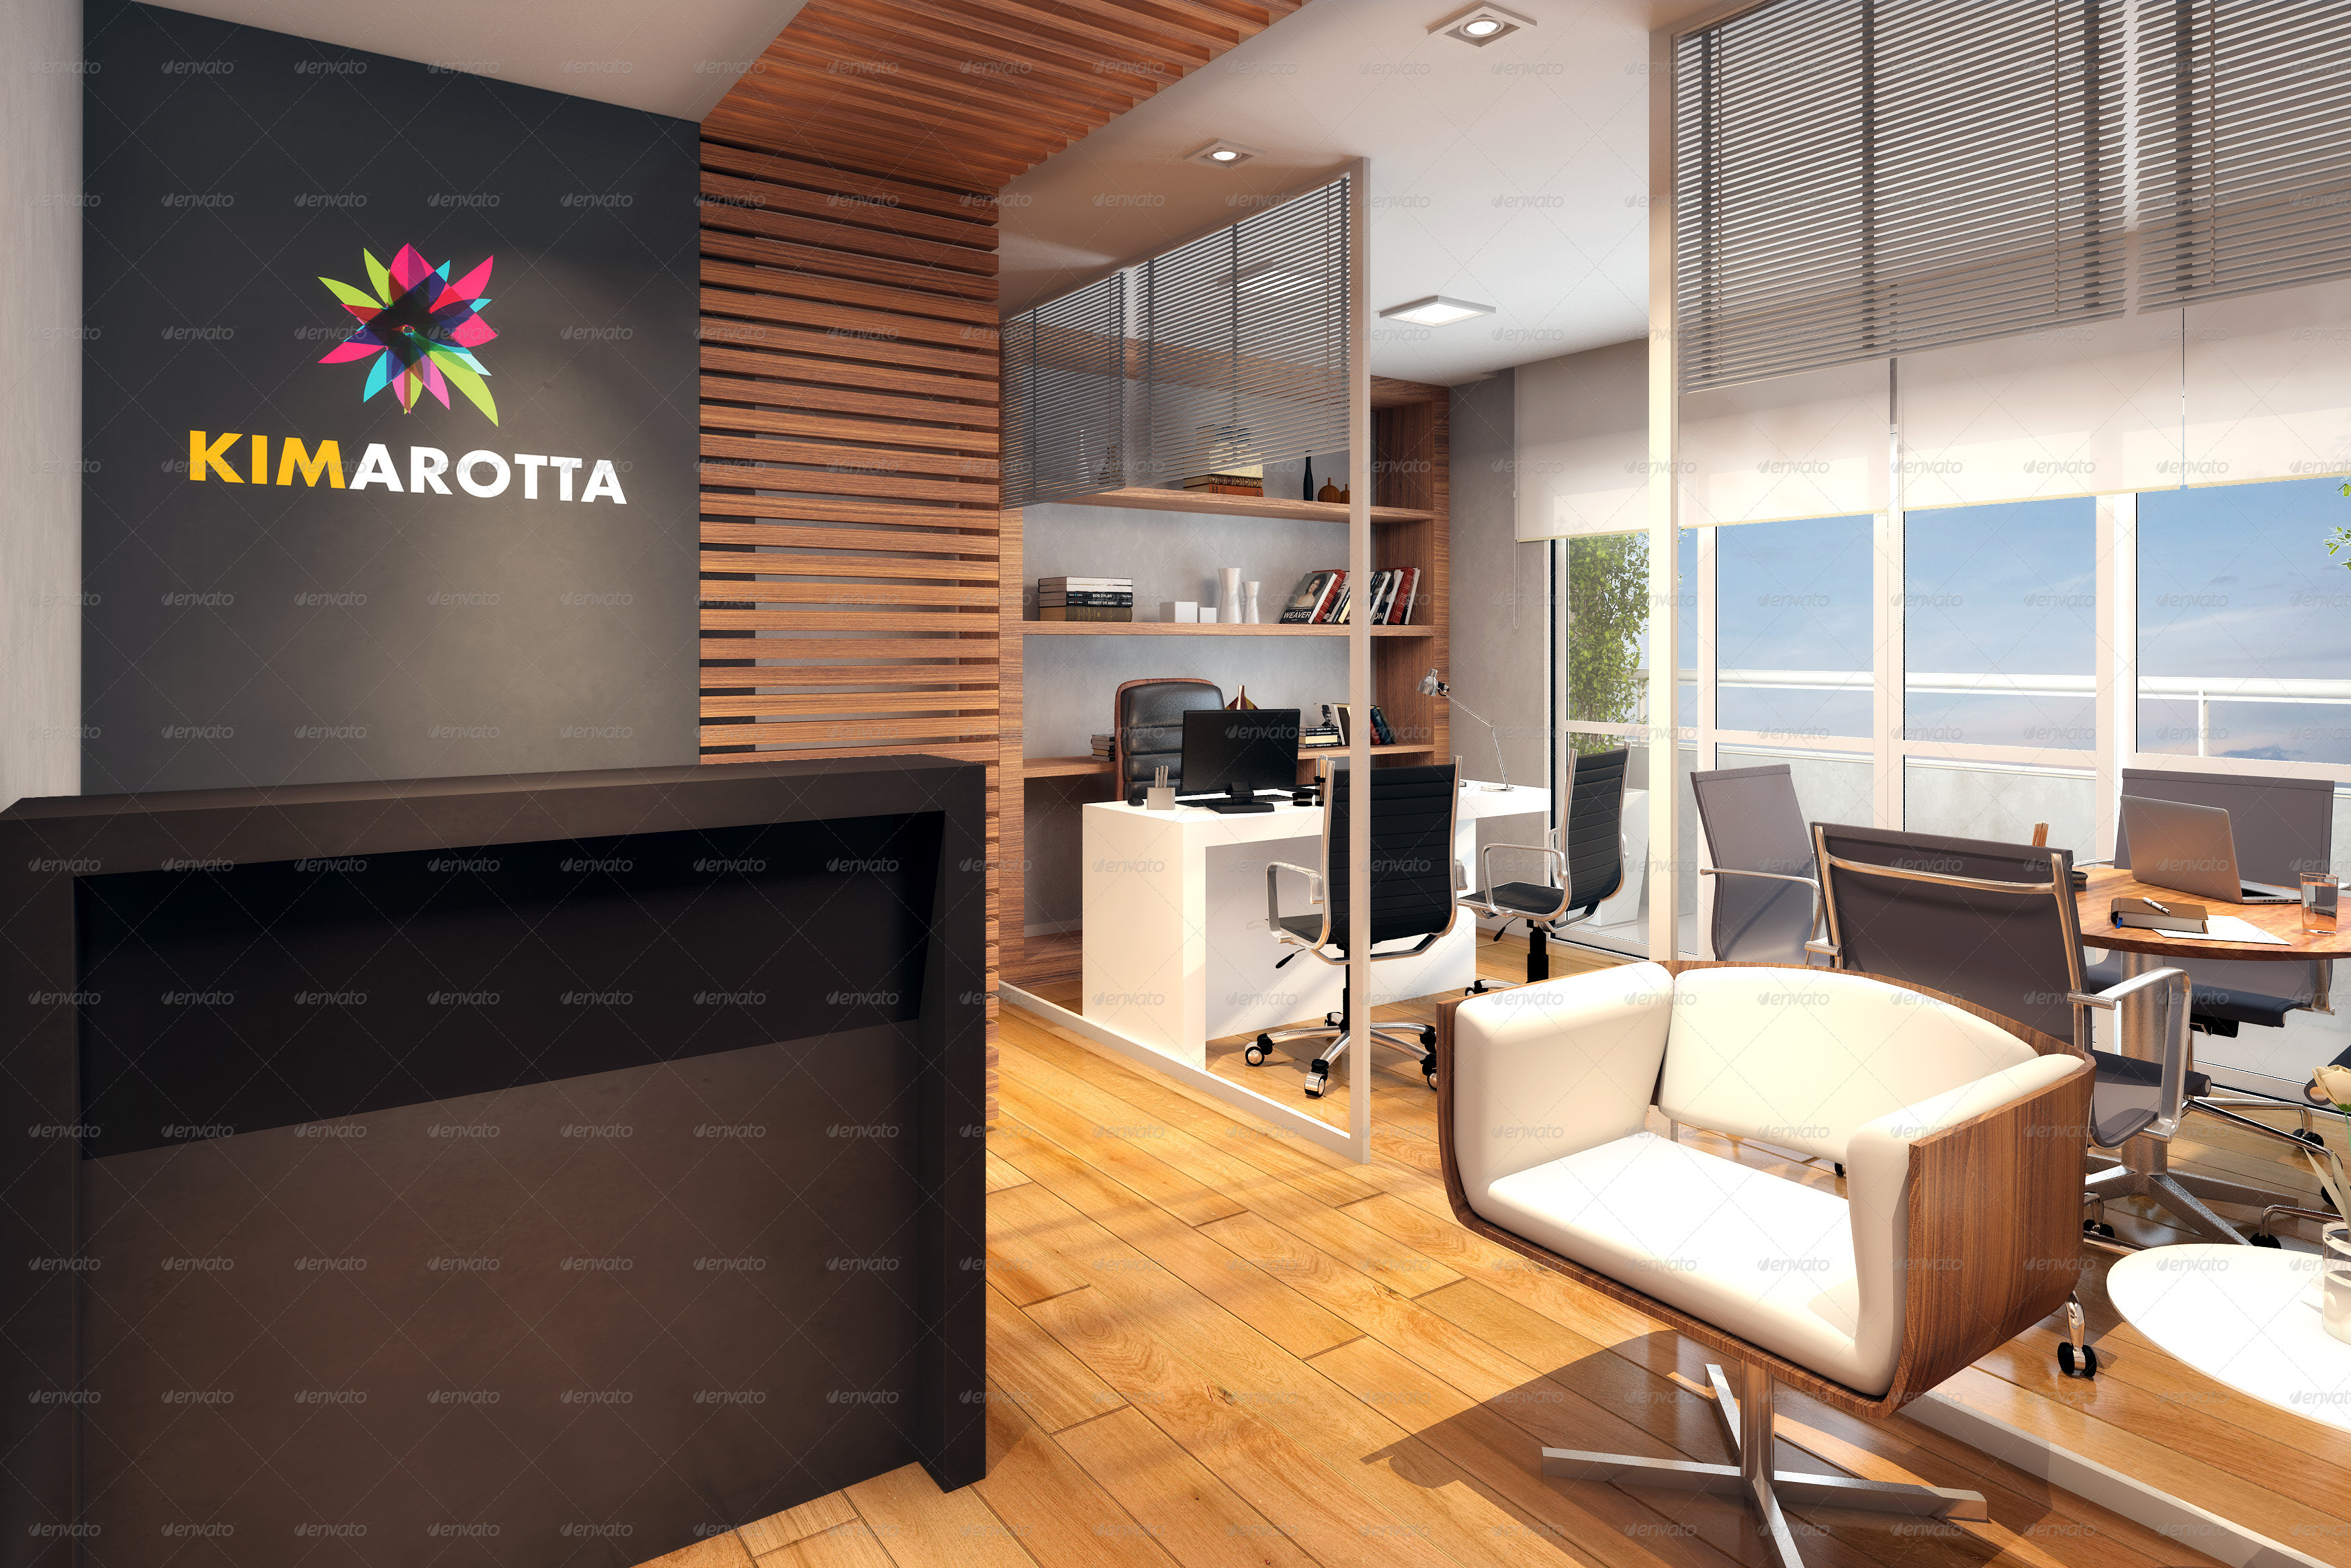 Building Office Branding Mockup by kimarotta | GraphicRiver